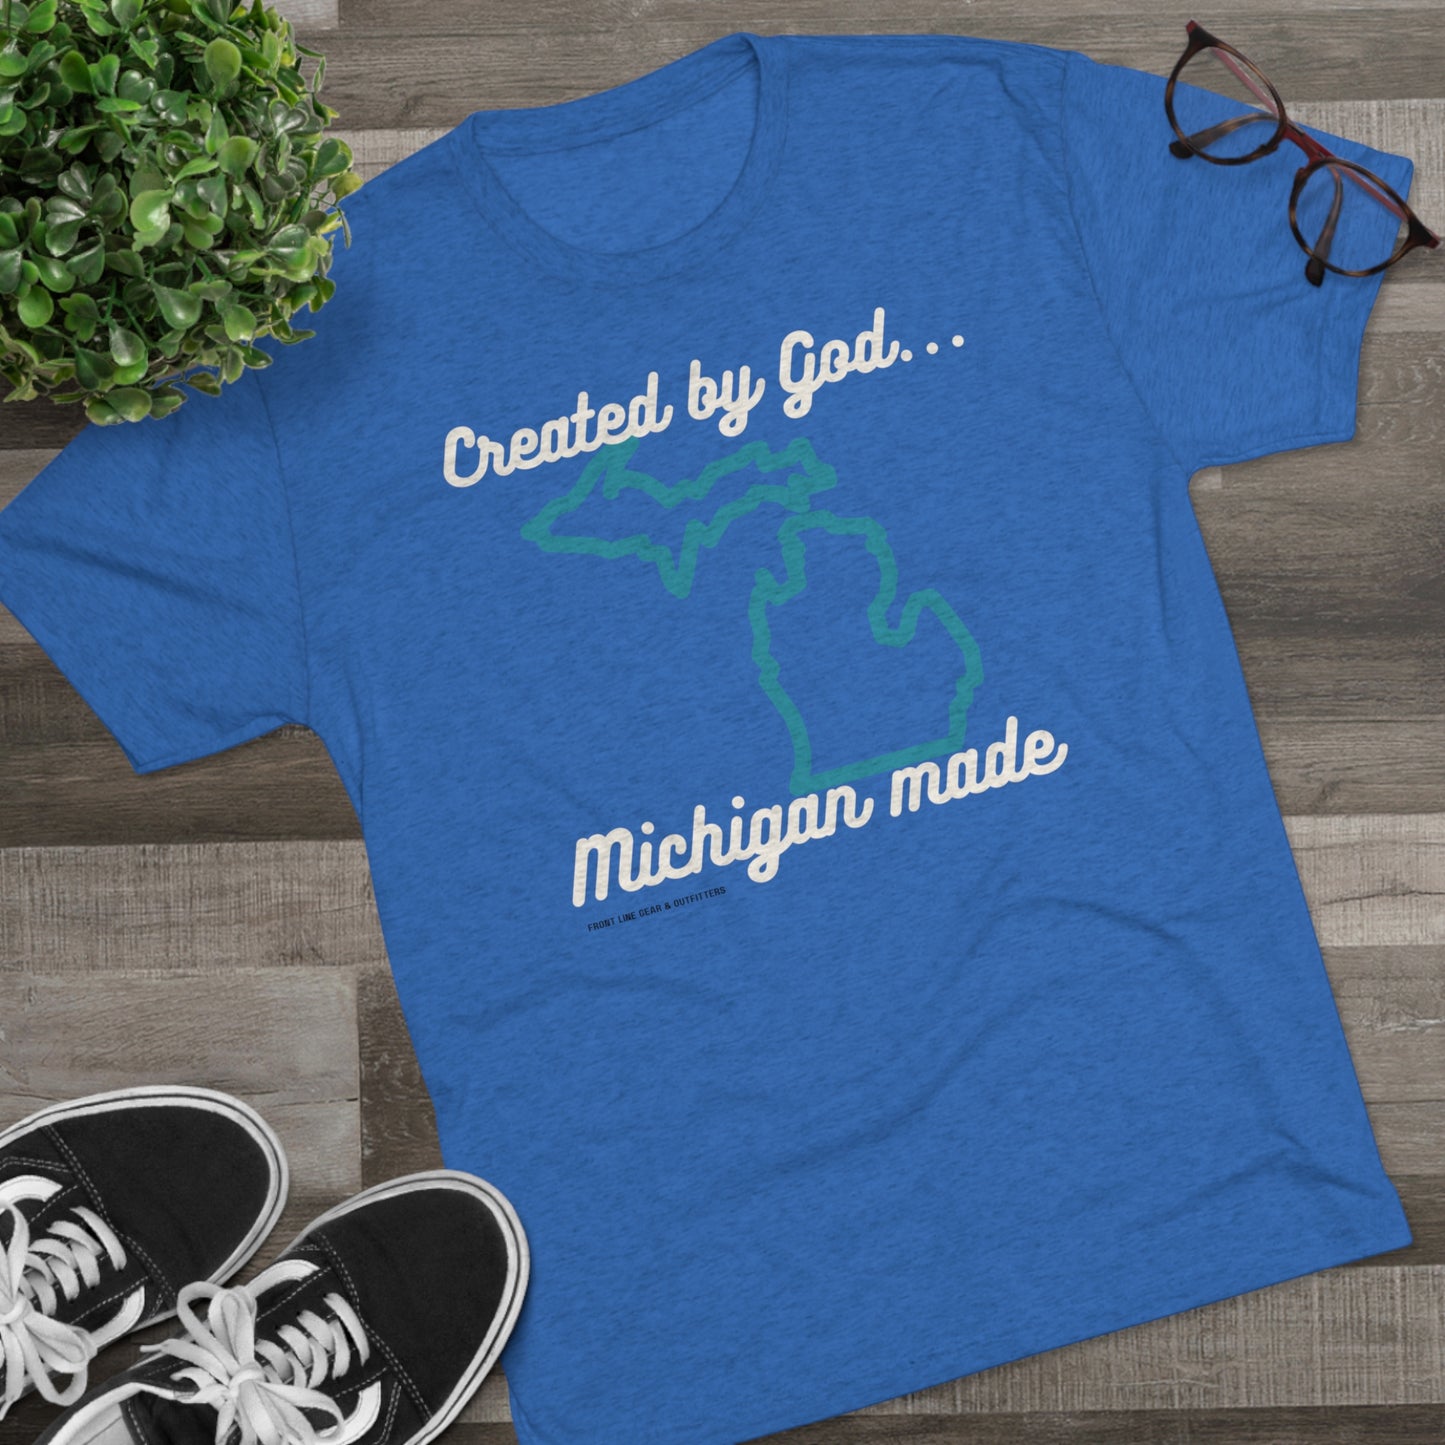 Created by God...Michigan made Tee